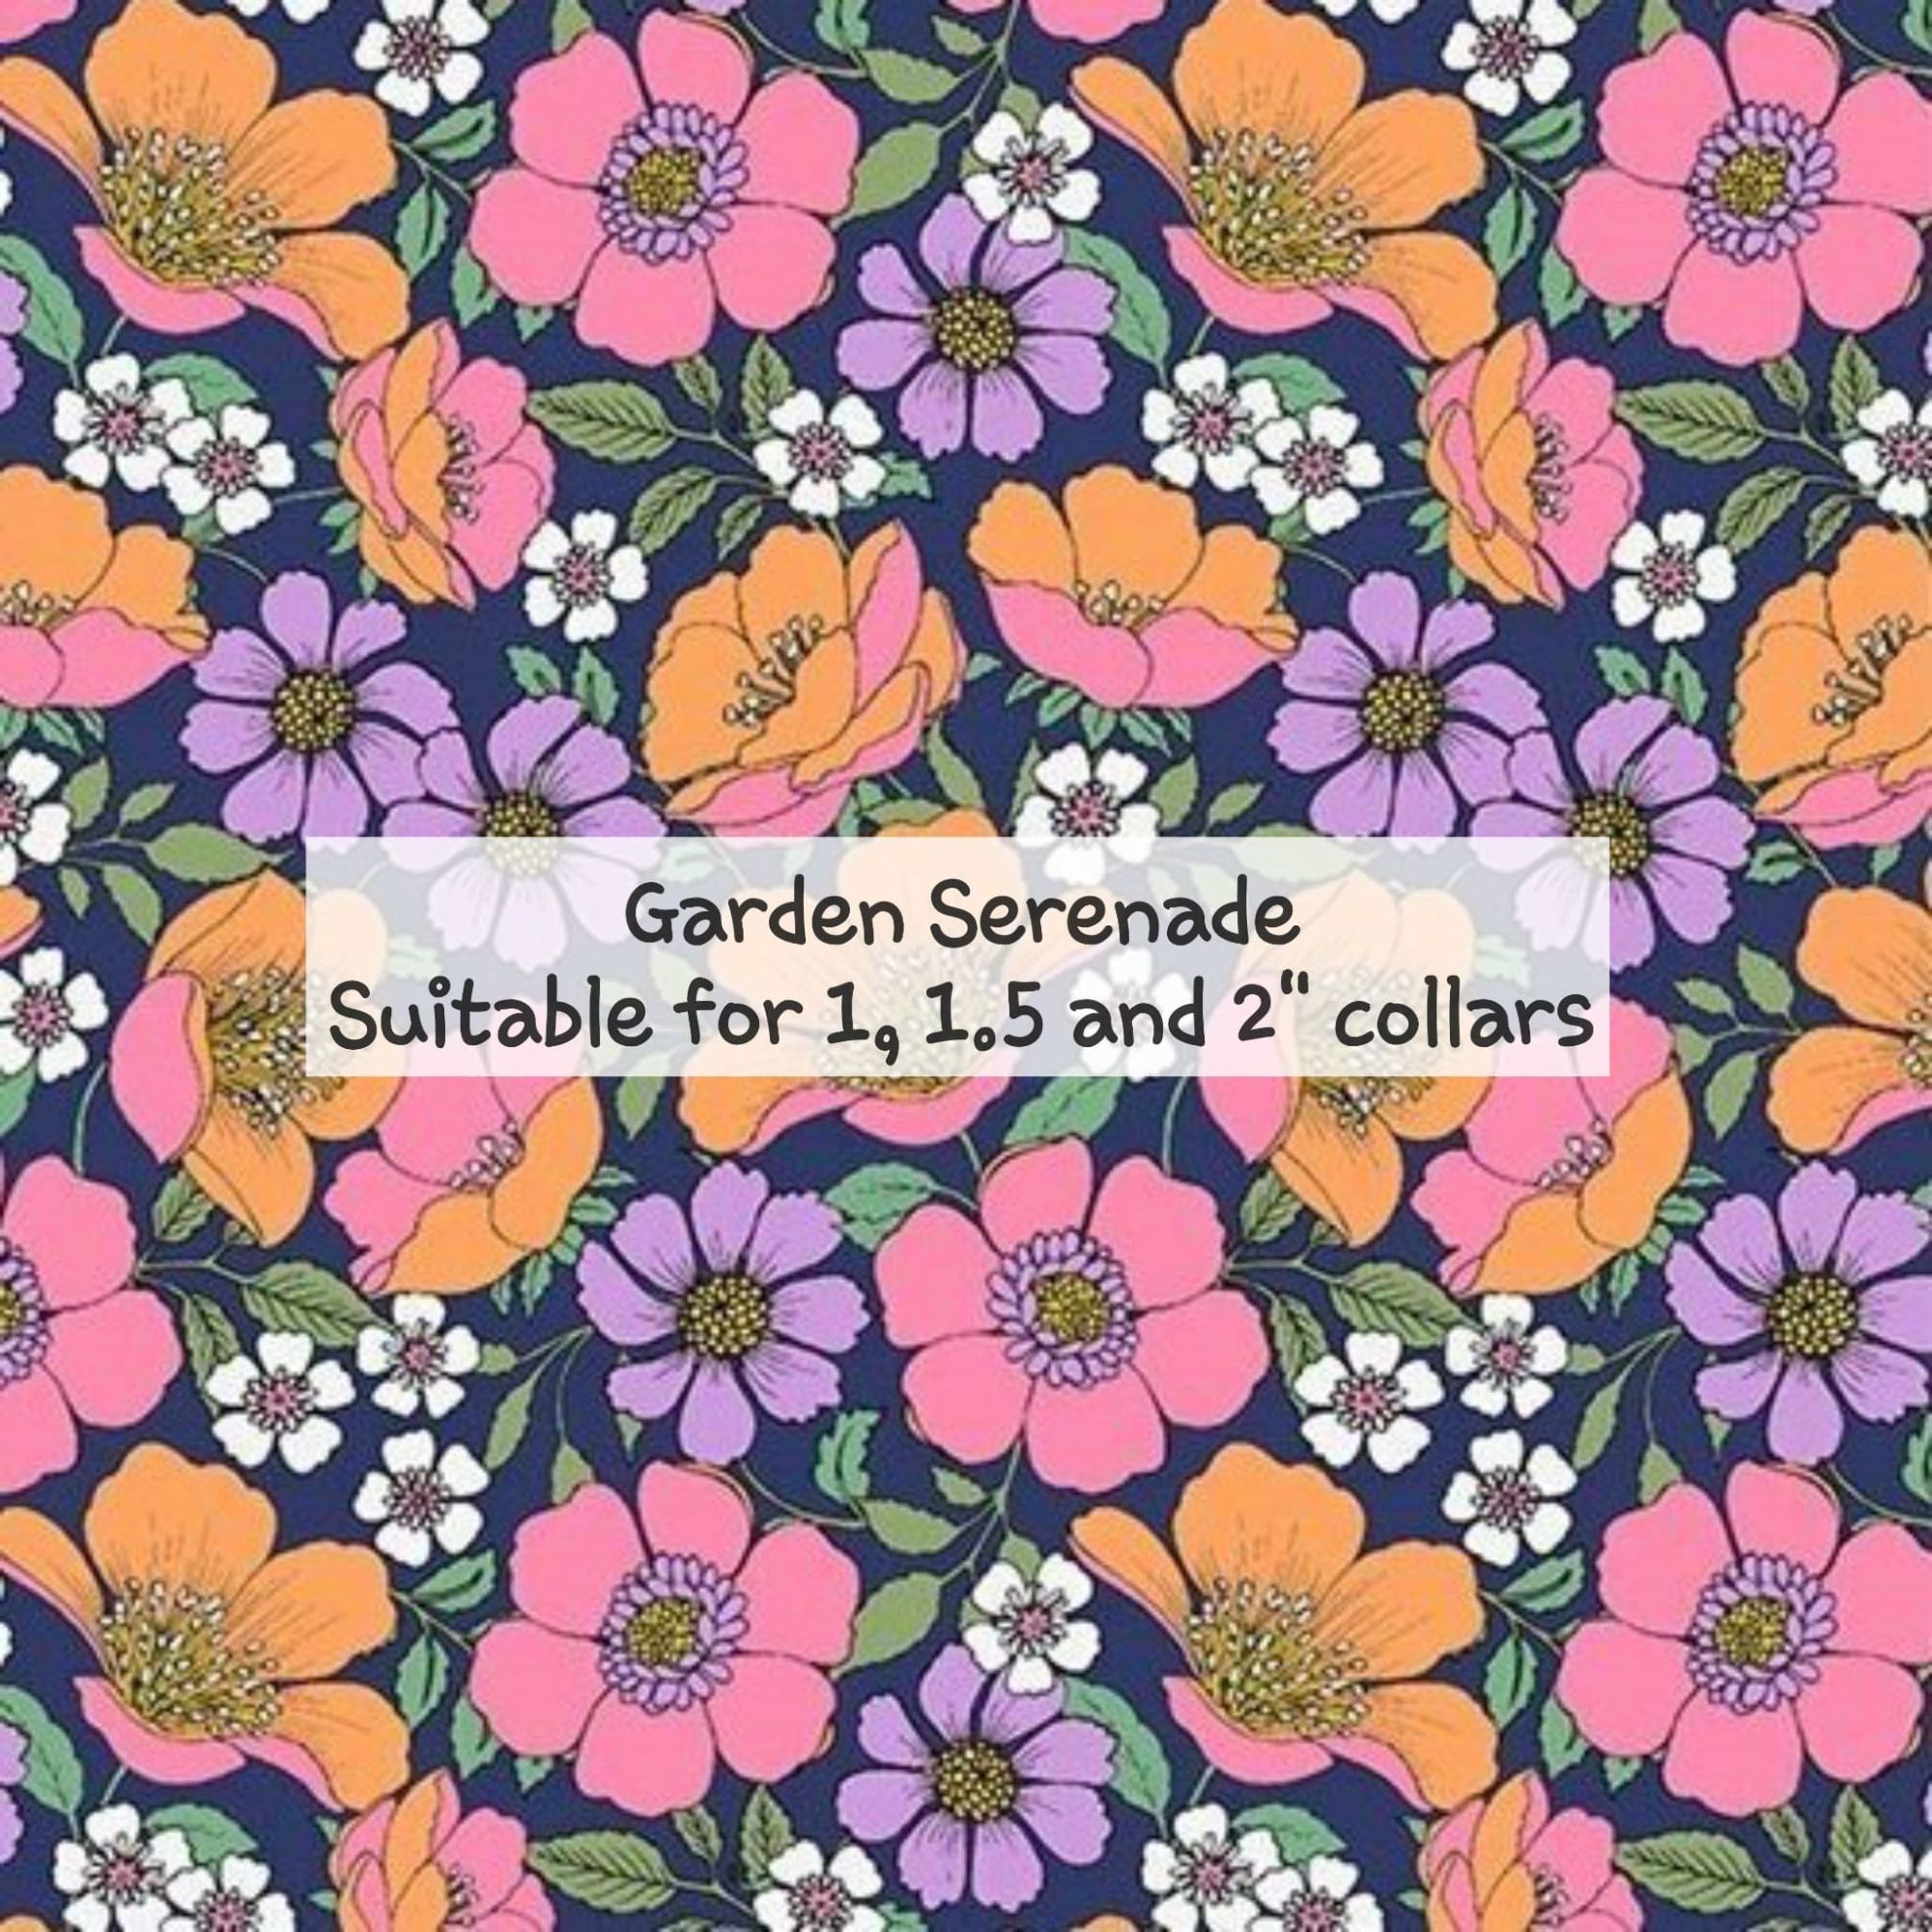 Garden Serenade